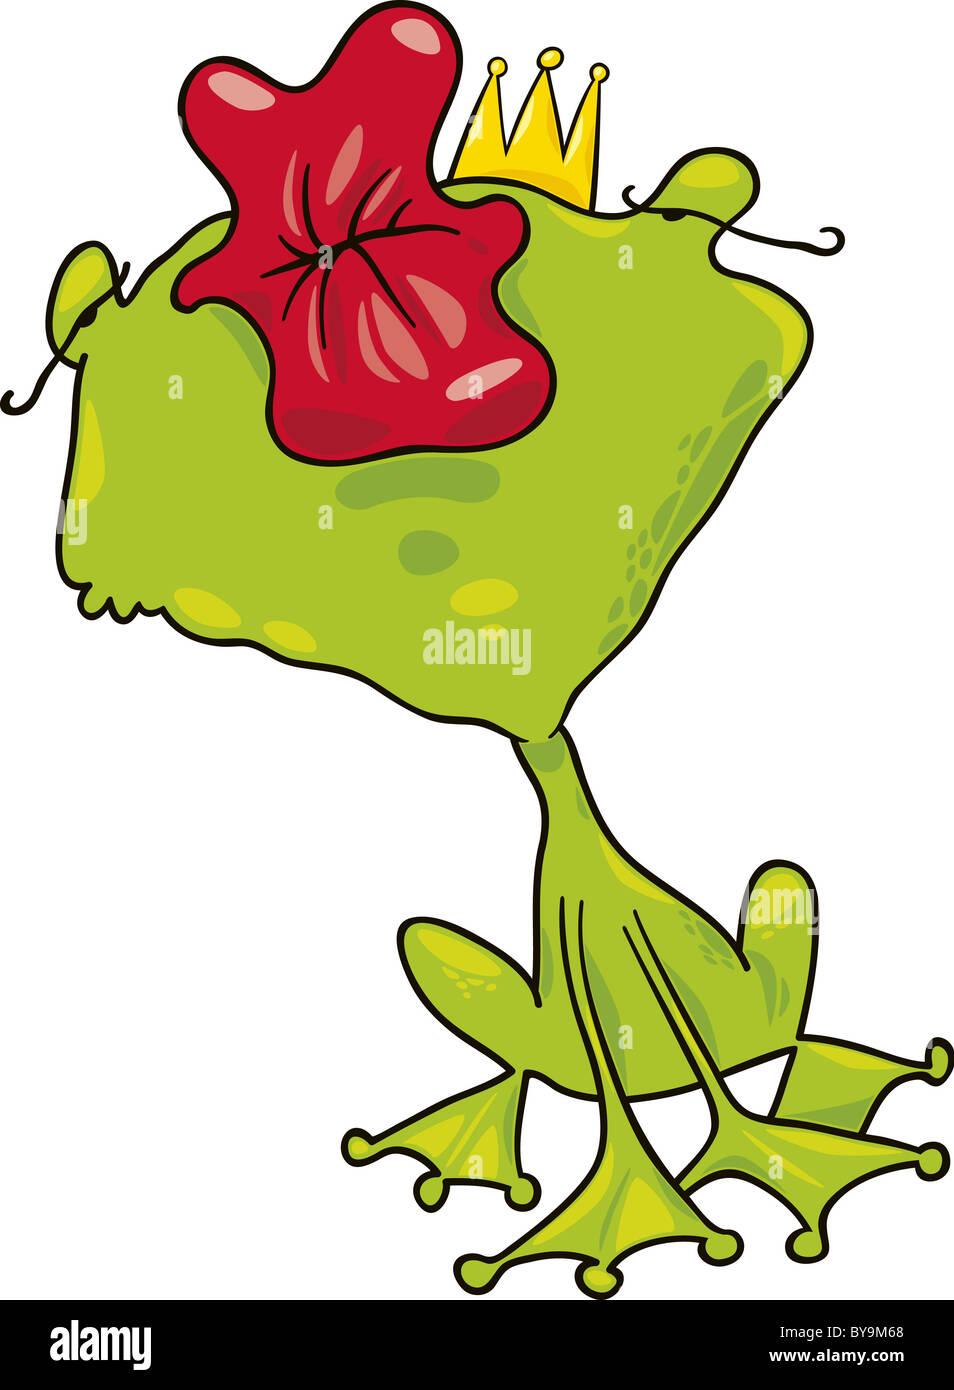 cartoon illustration of funny prince frog kiss Stock Photo